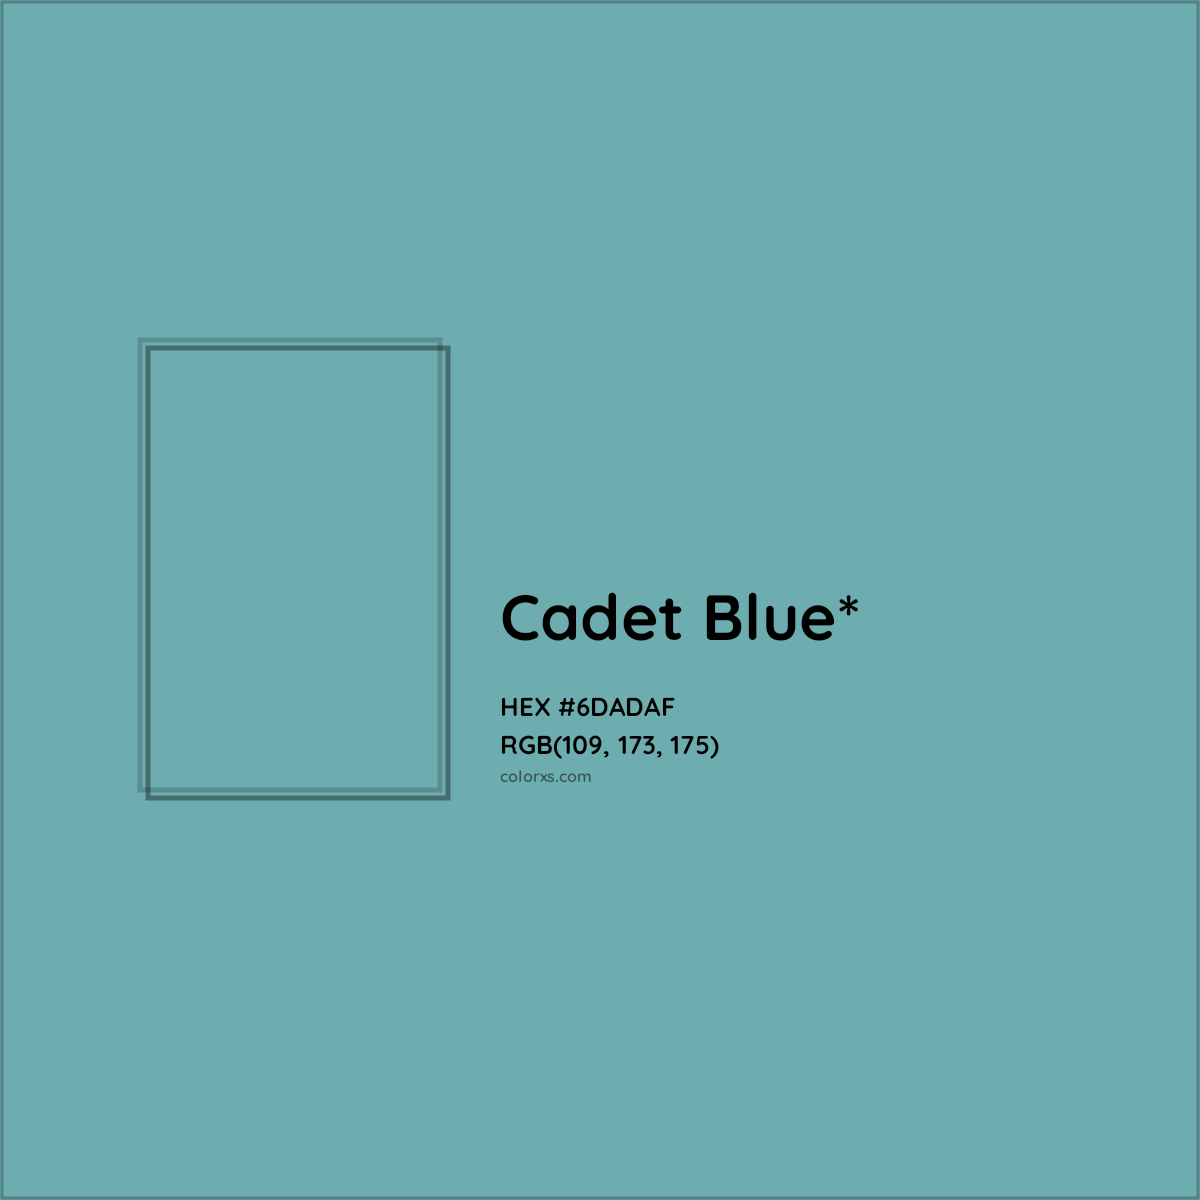 HEX #6DADAF Color Name, Color Code, Palettes, Similar Paints, Images